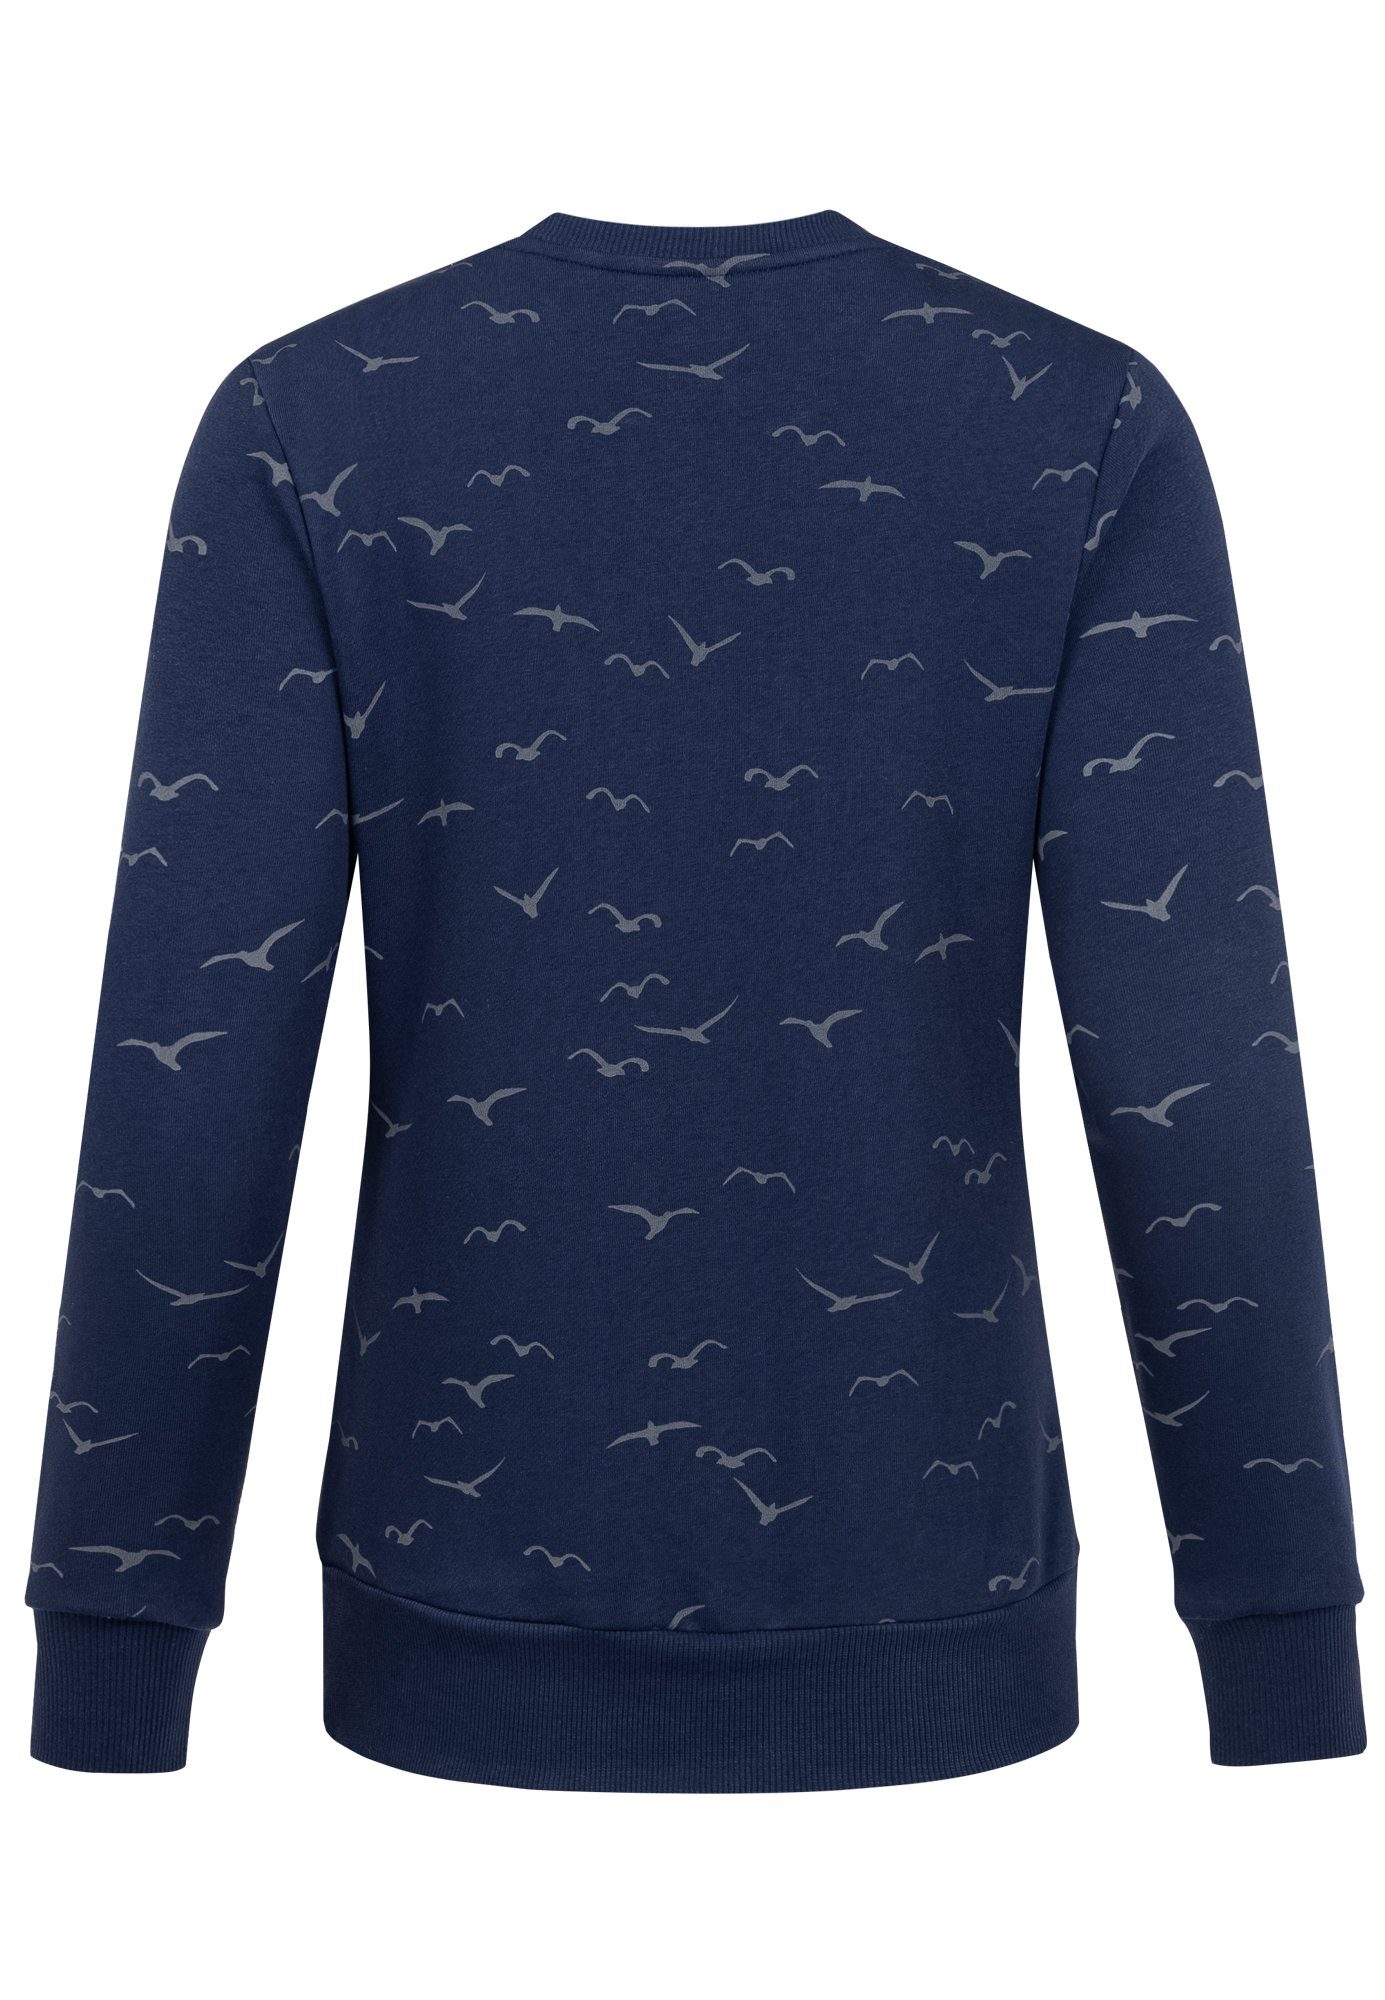 Sweatshirt Print REPUBLIX Pullover Hoodie ANA Navyblau Damen Sweatjacke Kapuzenpullover